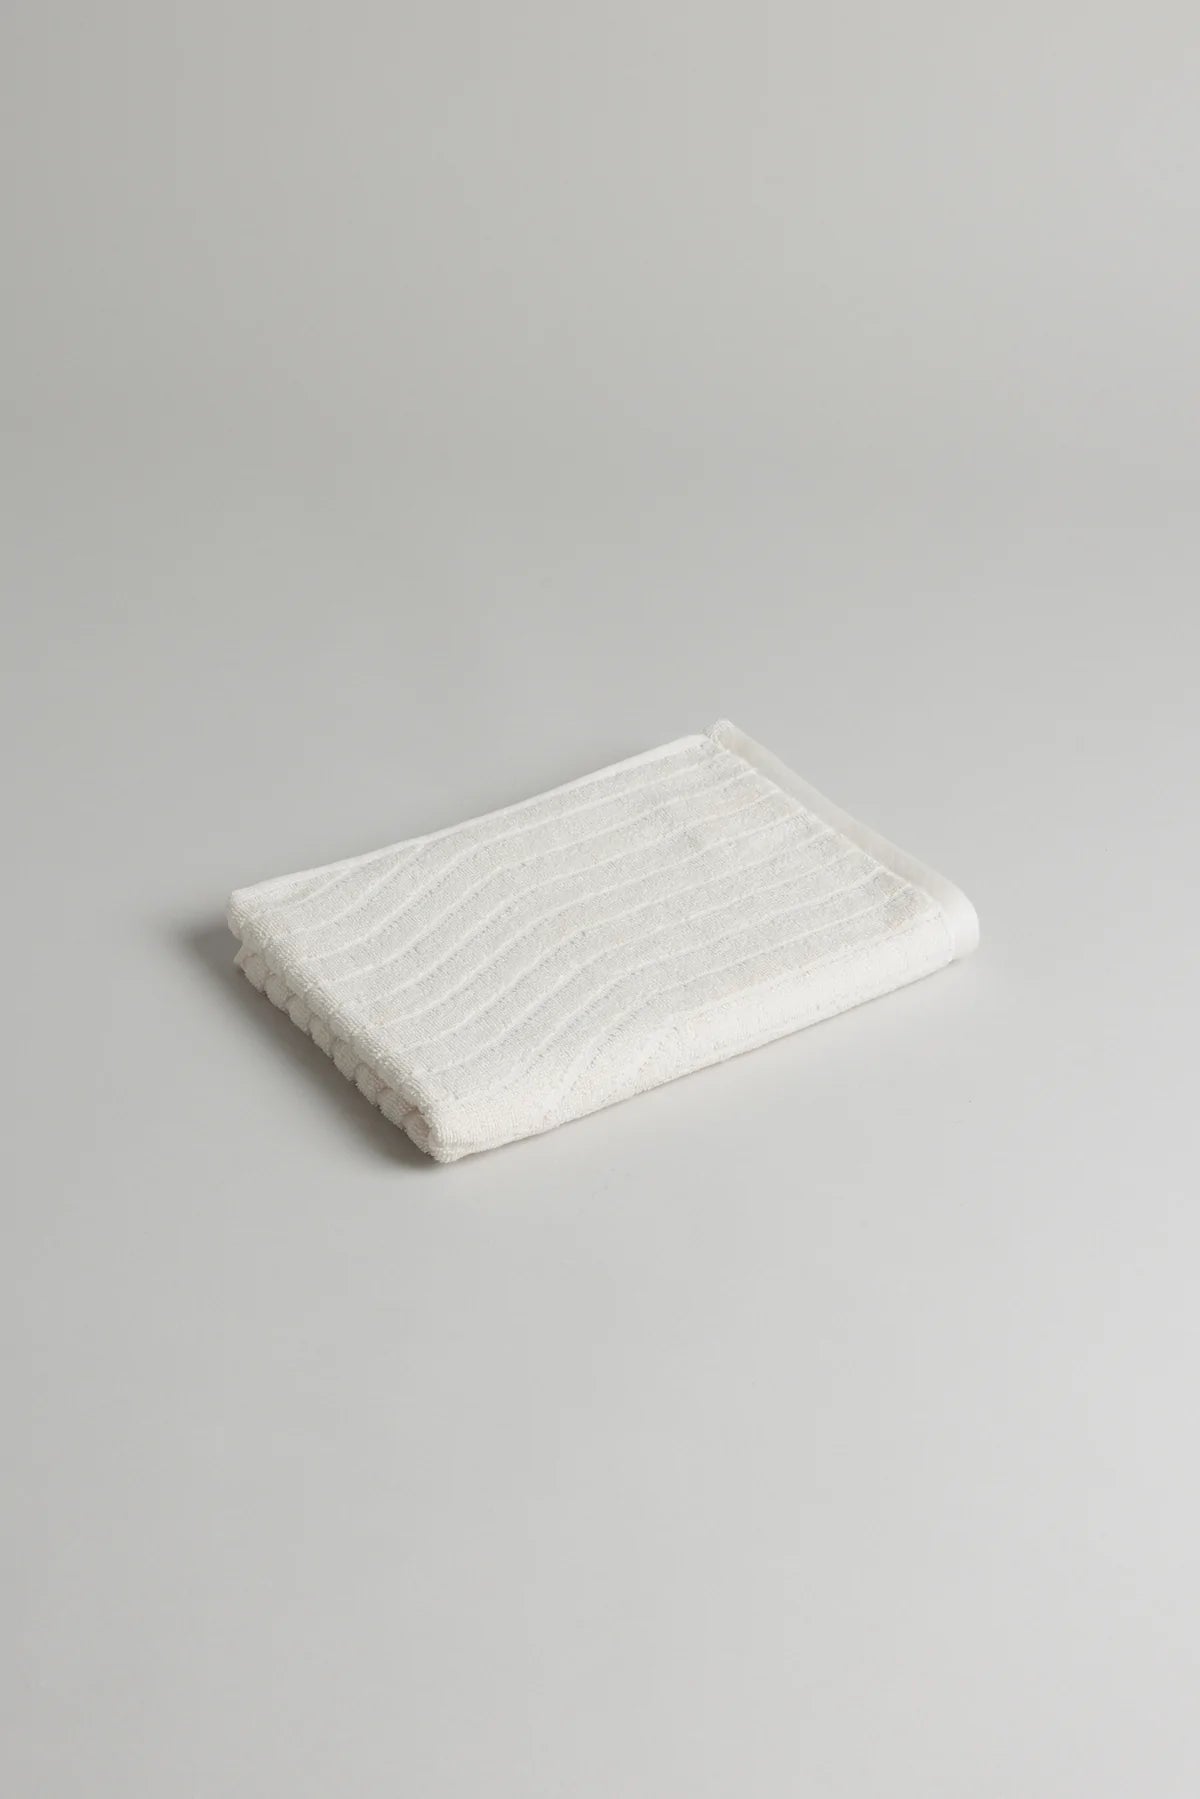 Virginia Hand Towel in Ivory by Baina